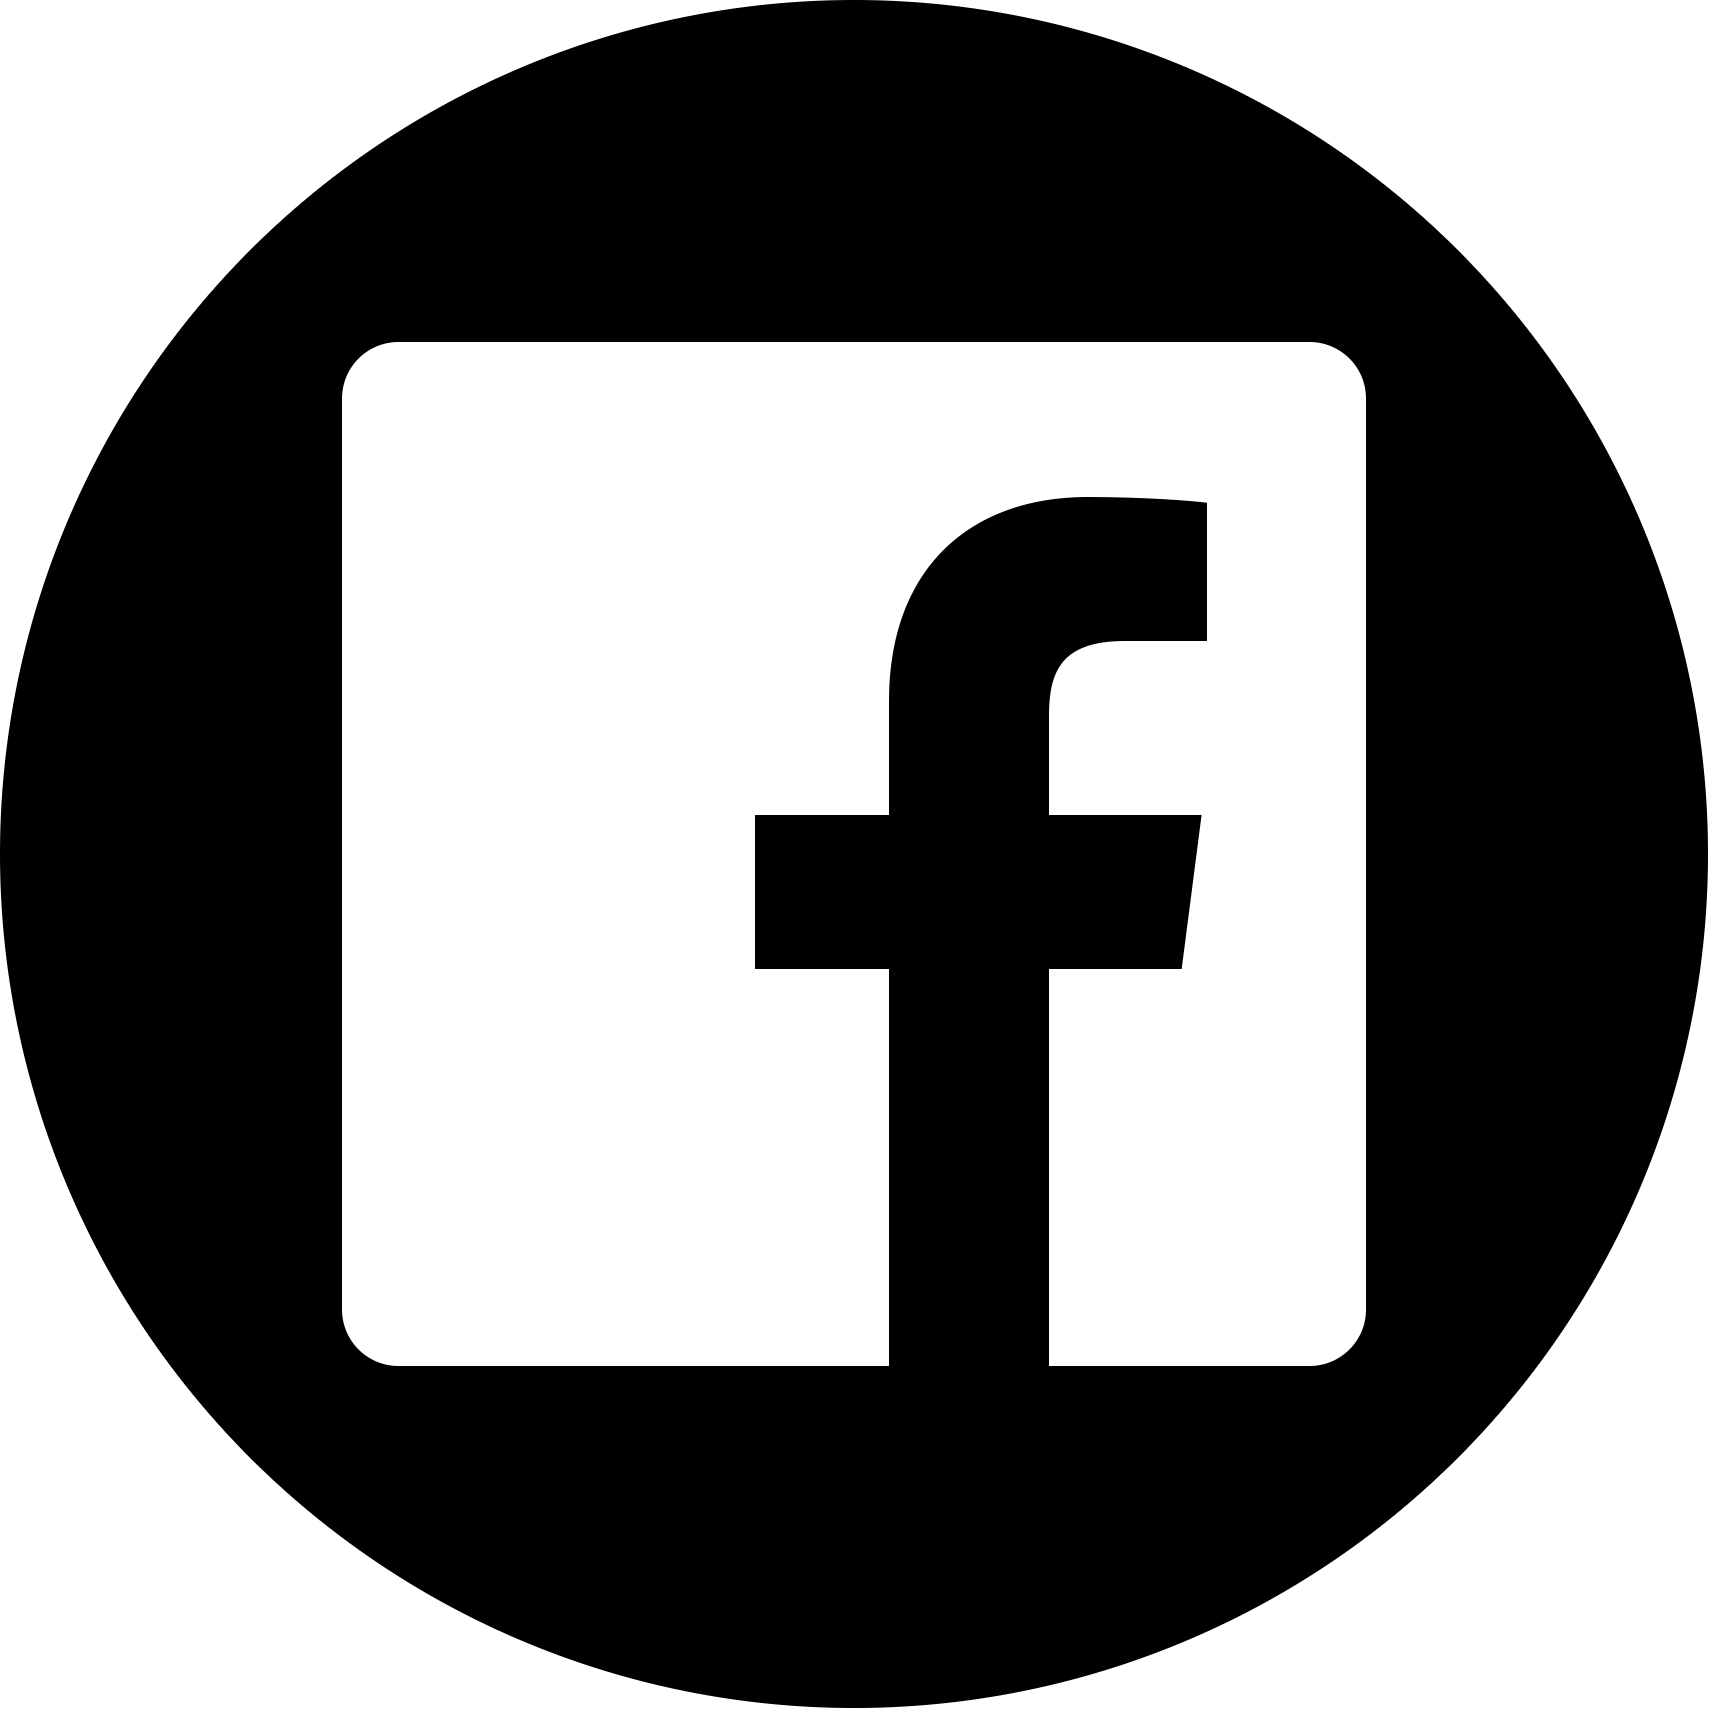 symbol, facebook logo, texture png background full hd 1080p